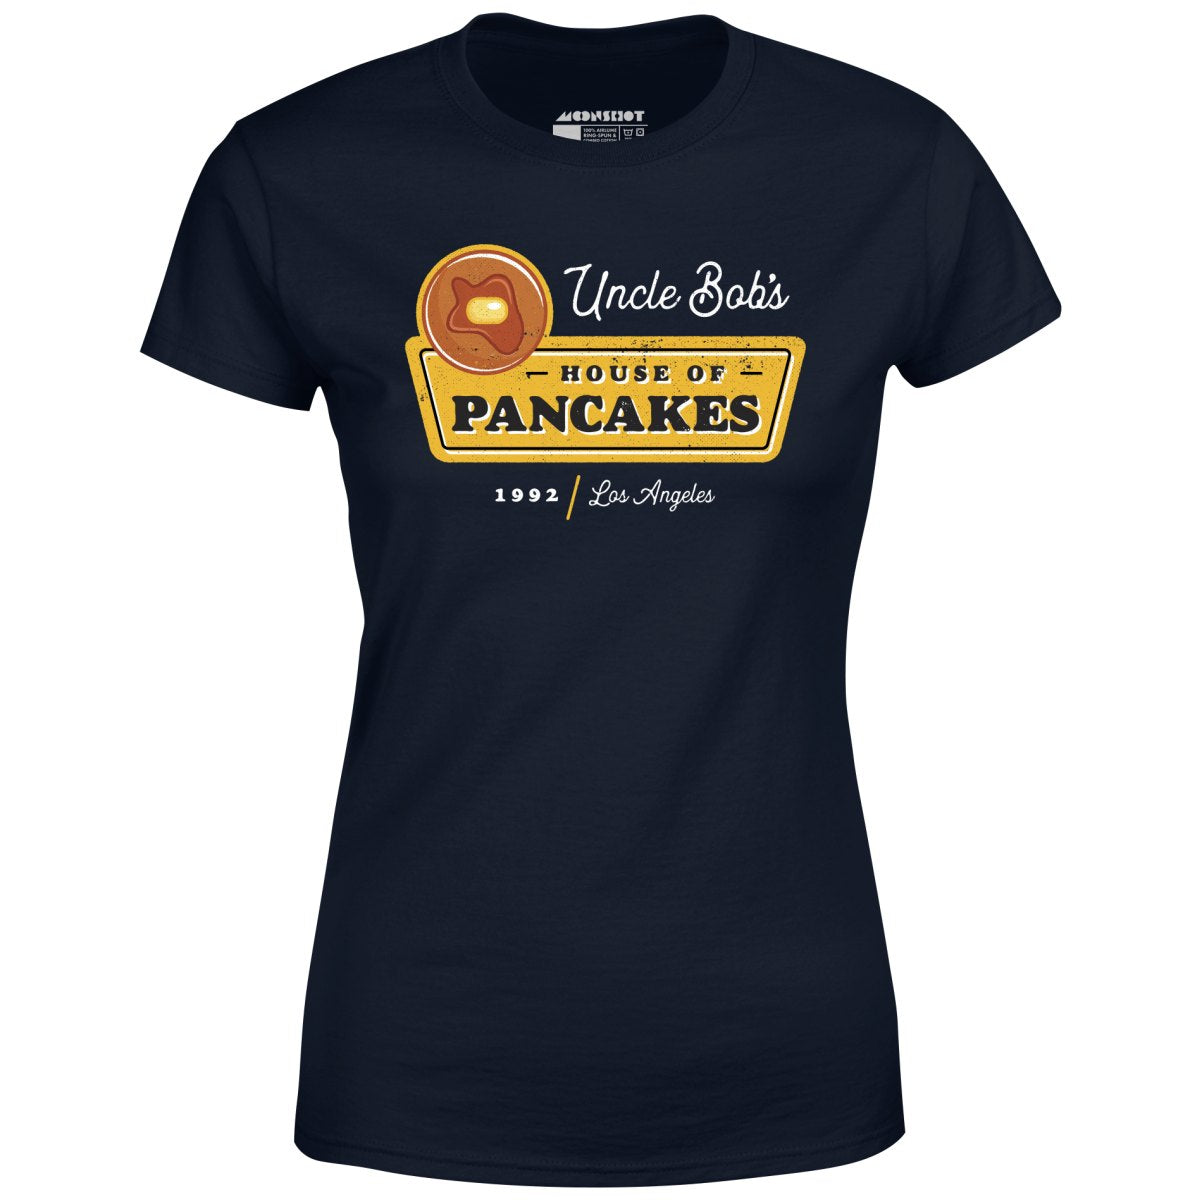 Uncle Bob's House of Pancakes - Reservoir Dogs - Women's T-Shirt